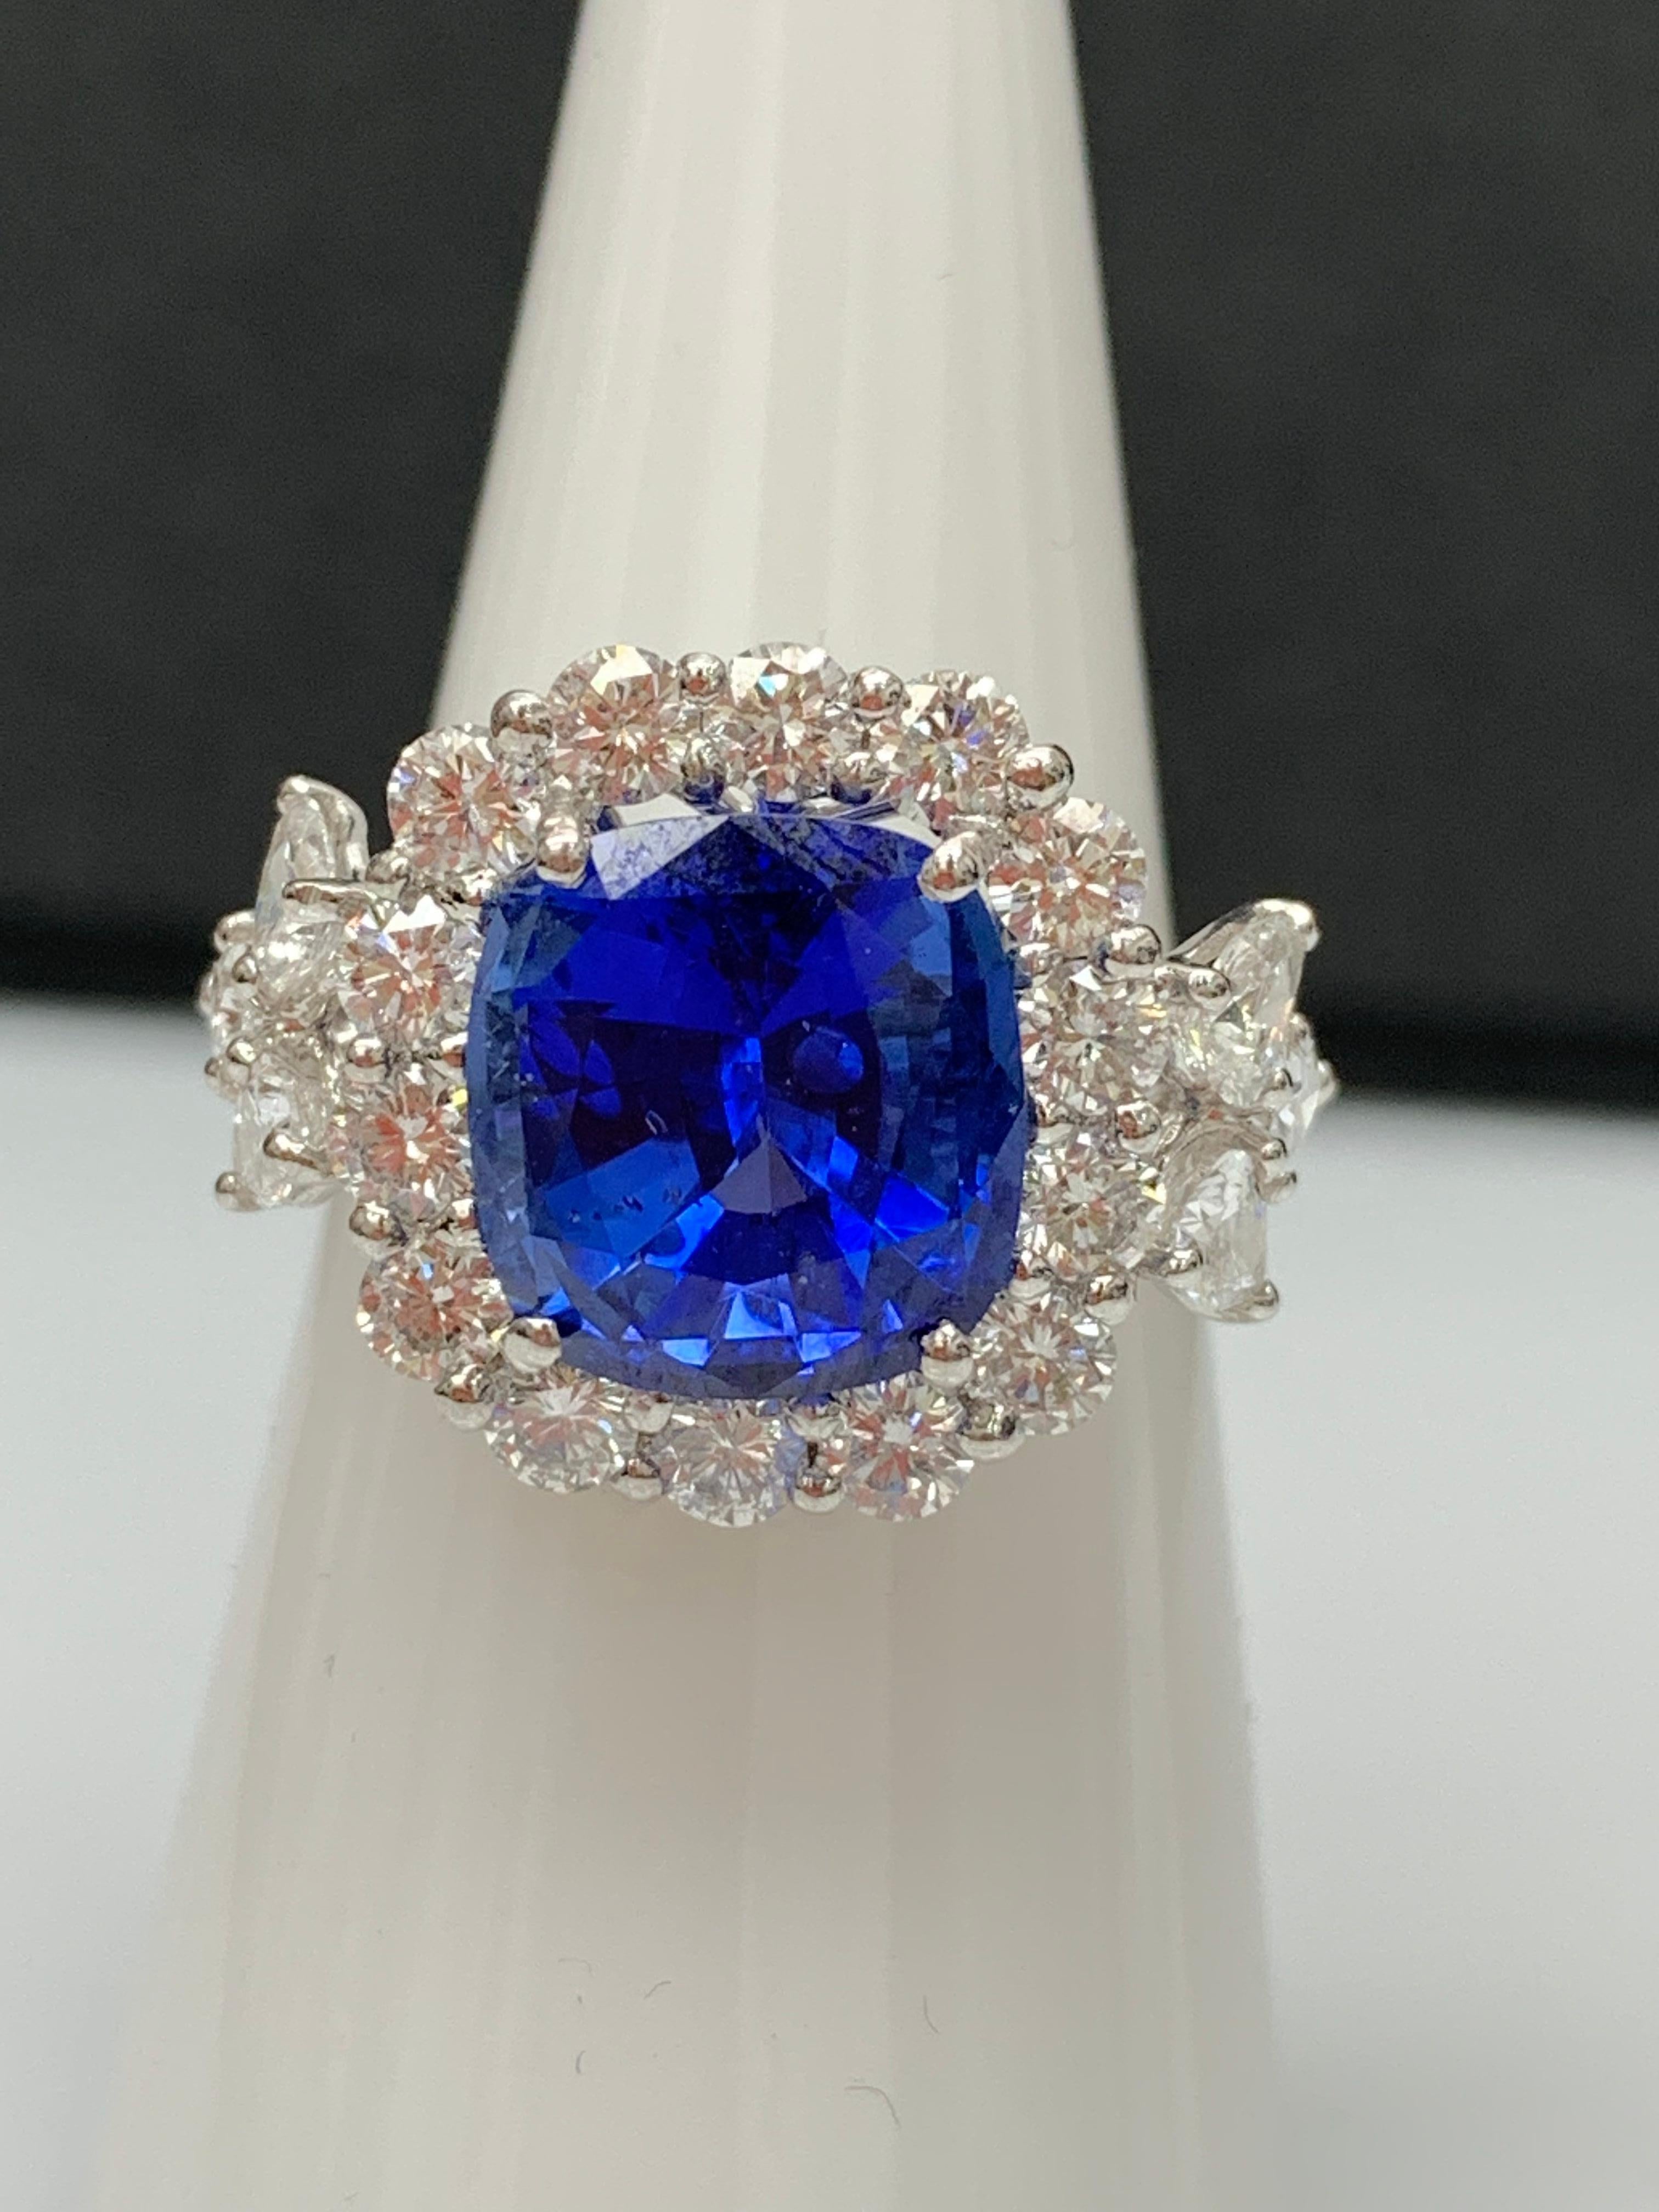 6.61 Carat Cushion Cut Blue Sapphire Diamond Engagement Ring in Platinum For Sale 14